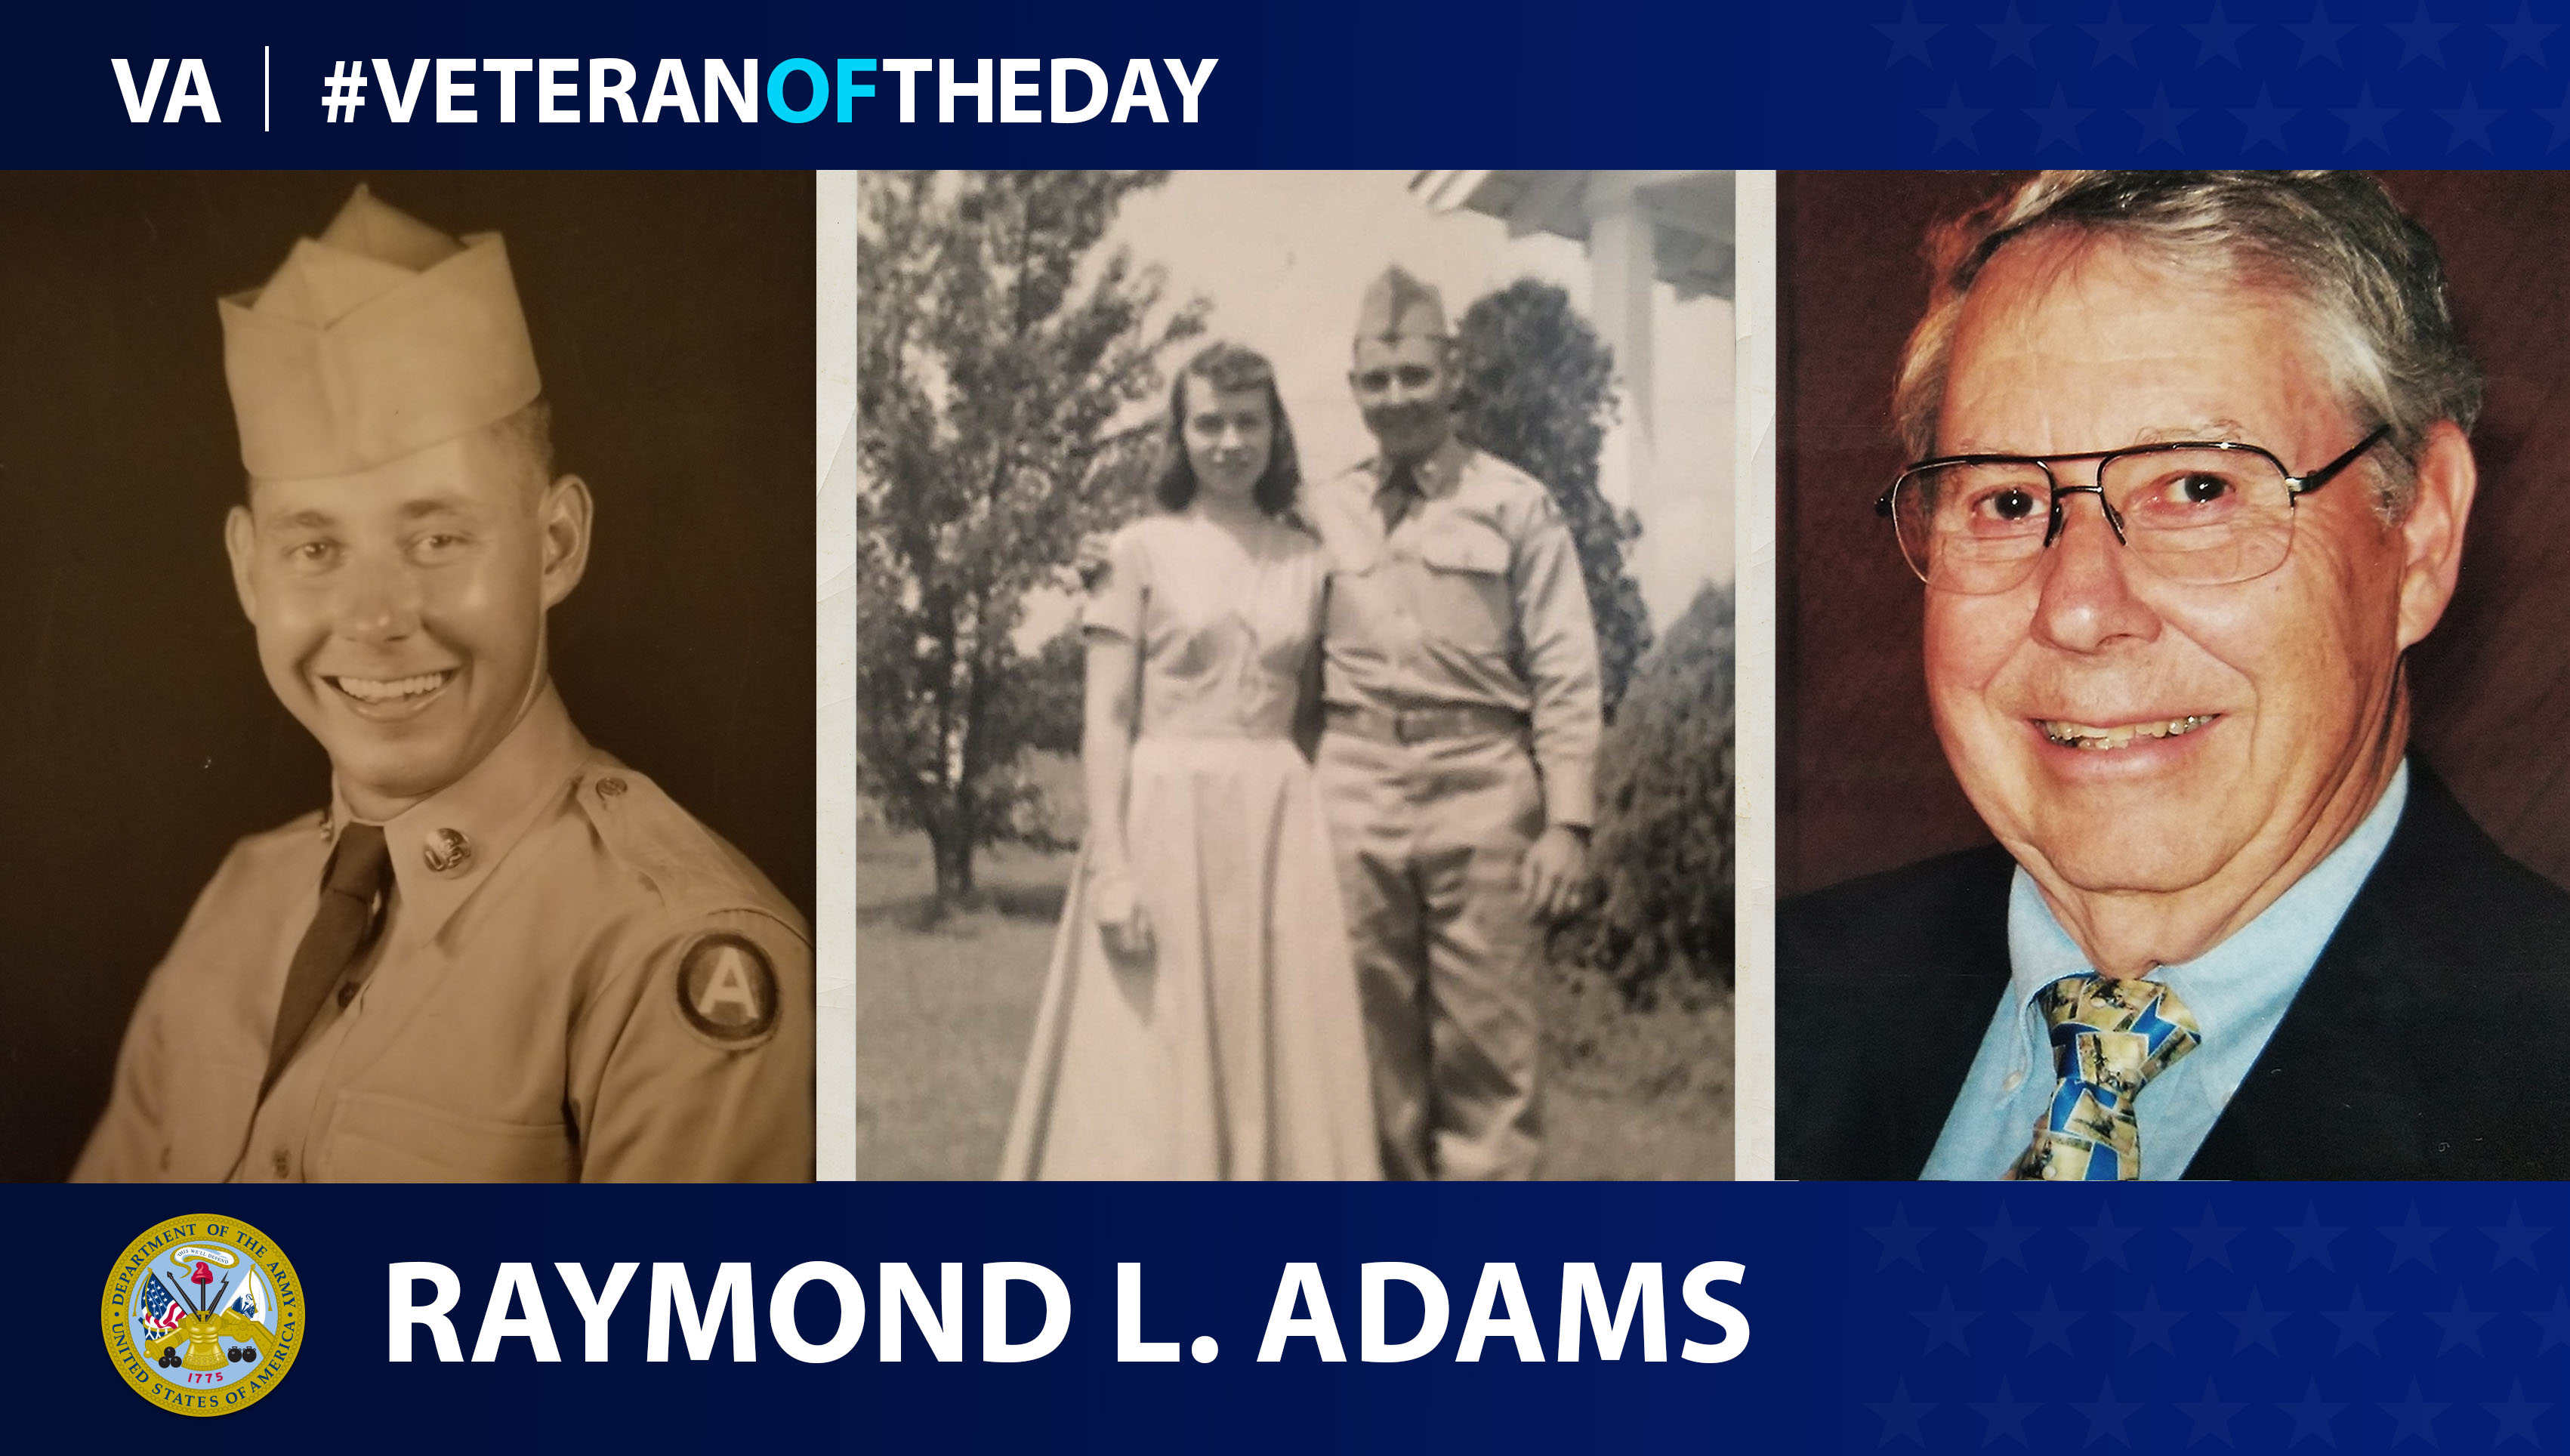 Army Veteran Raymond L. Adams is today's Veteran of the Day.